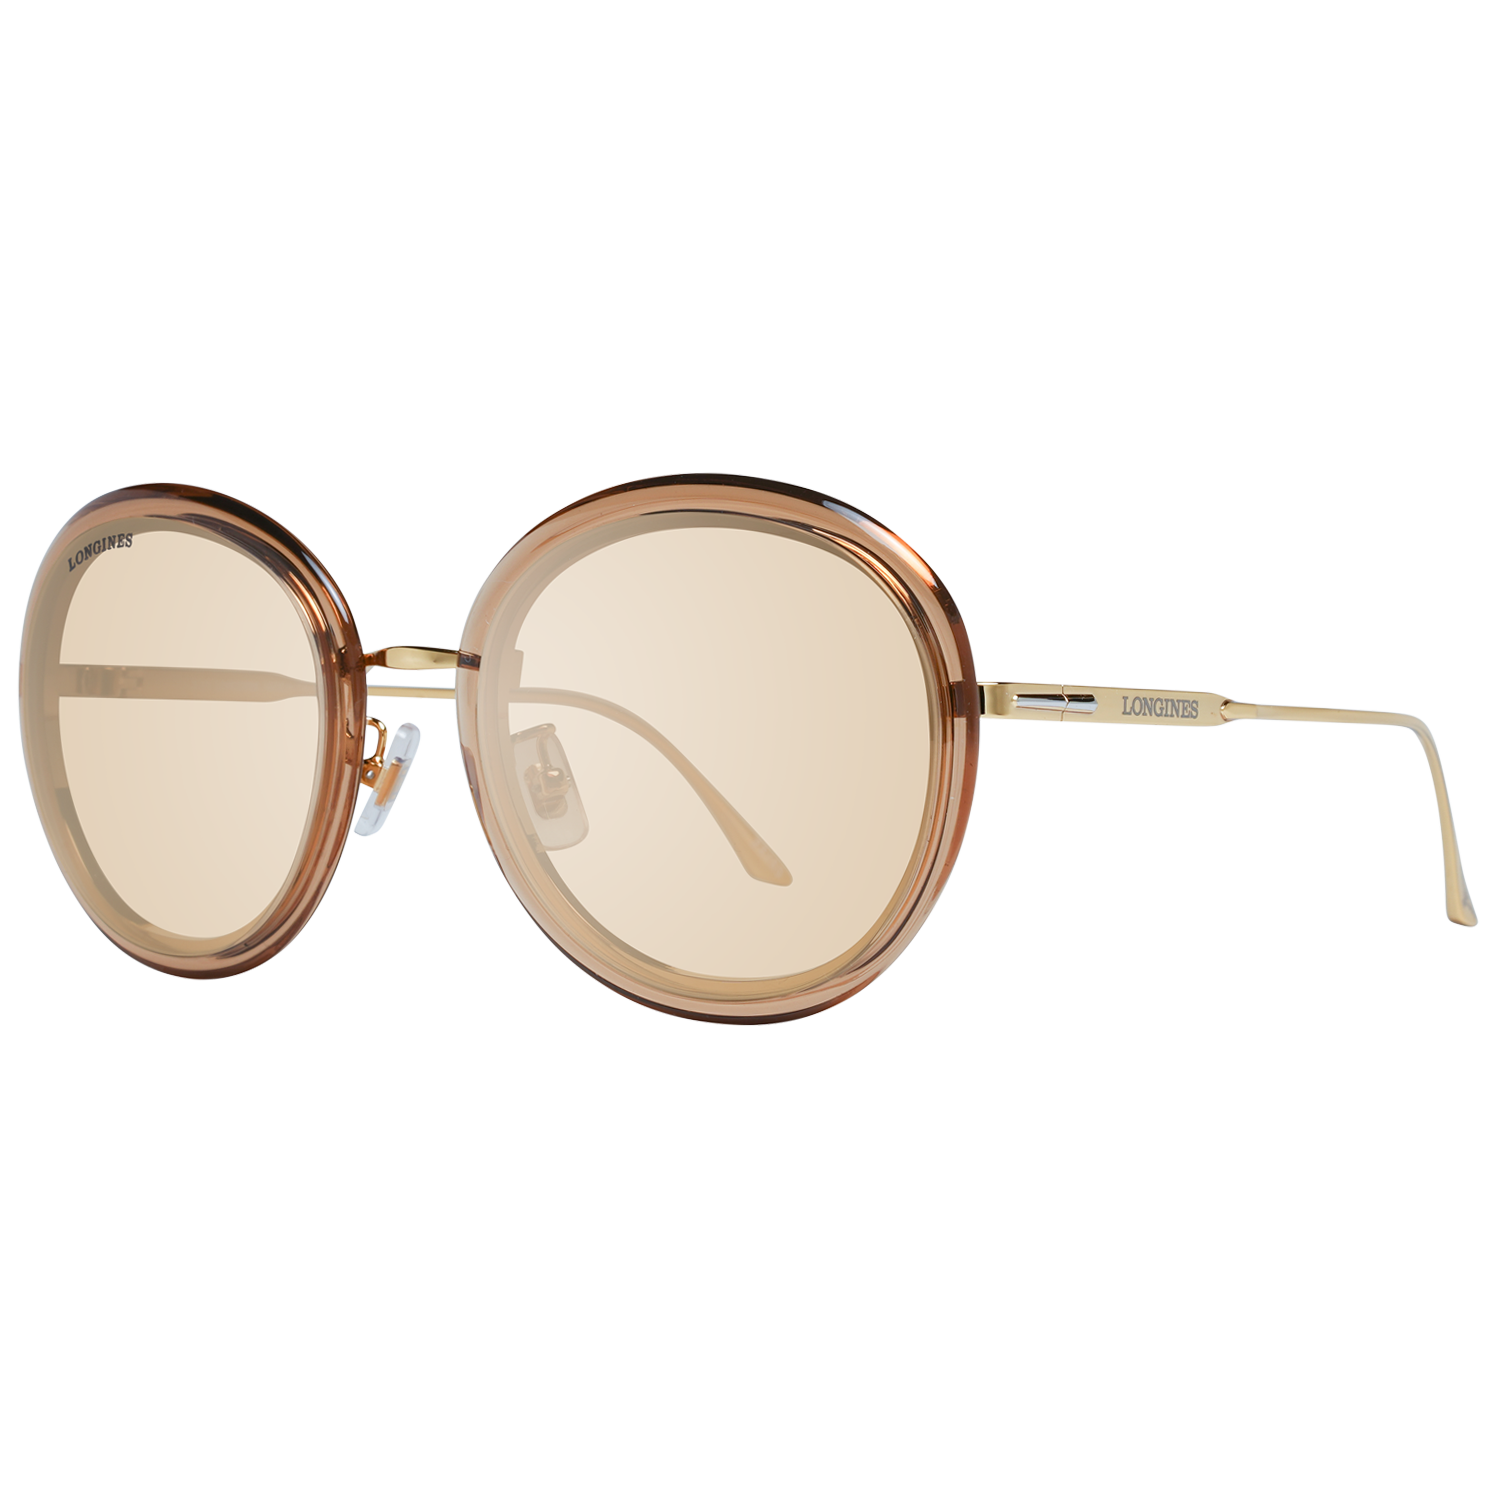 Longines Sunglasses Longines Sunglasses LG0011-H 45G 56 Mirrored Eyeglasses Eyewear UK USA Australia 